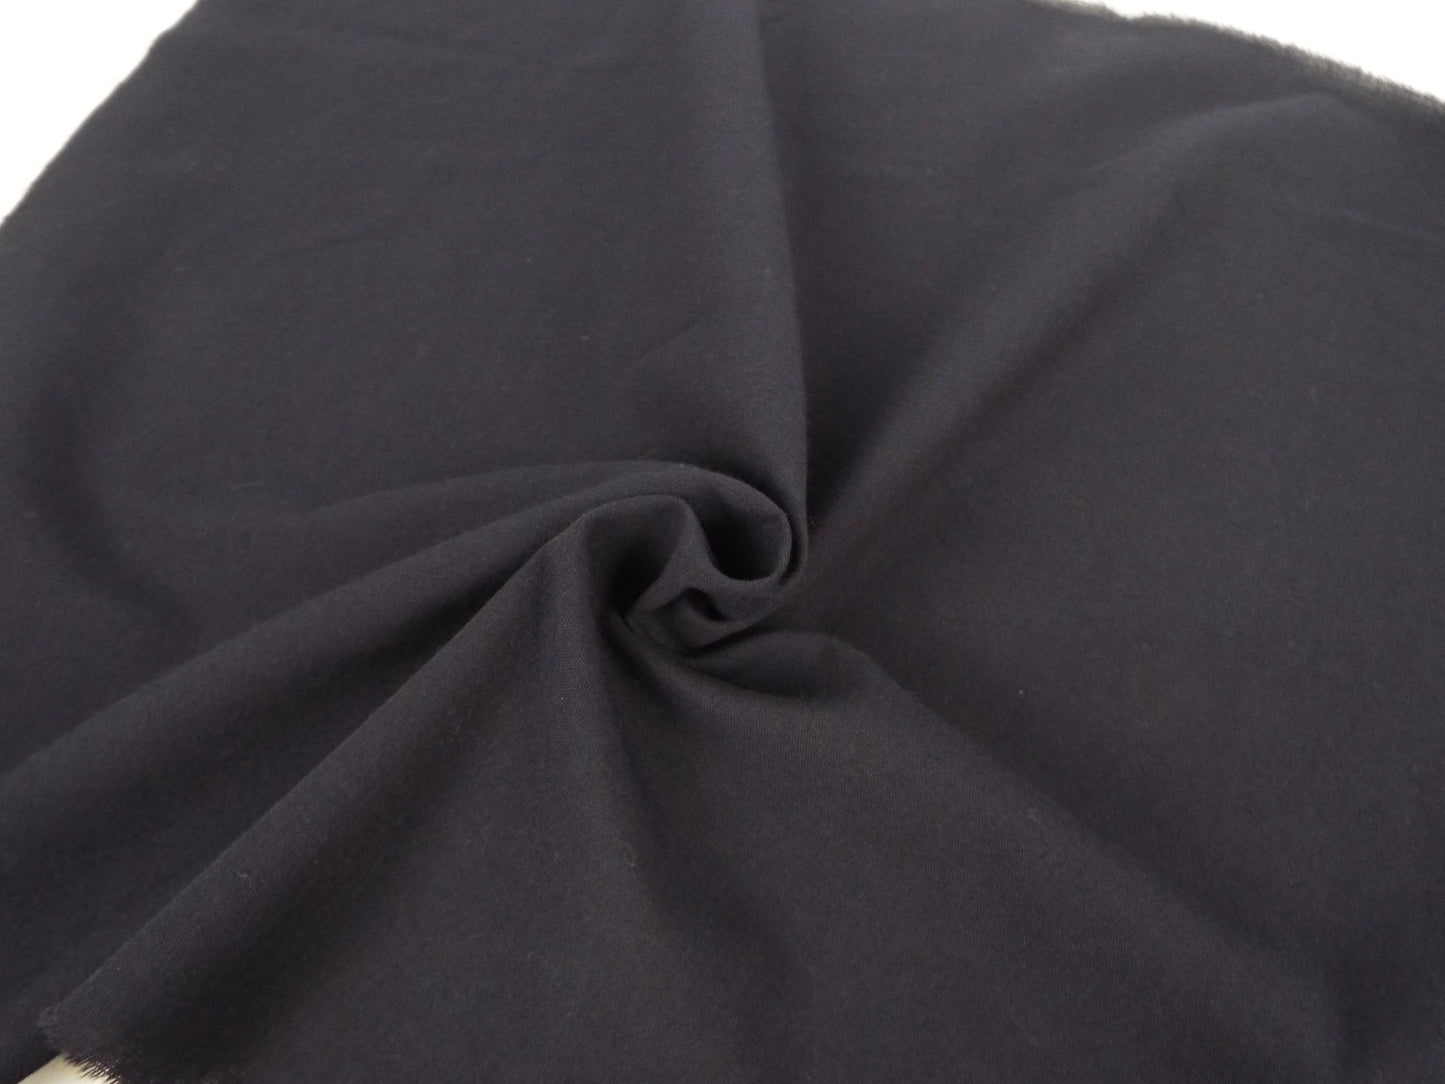 Kameda striped cotton fabric, thin plain, black, navy blue, 2 patterns